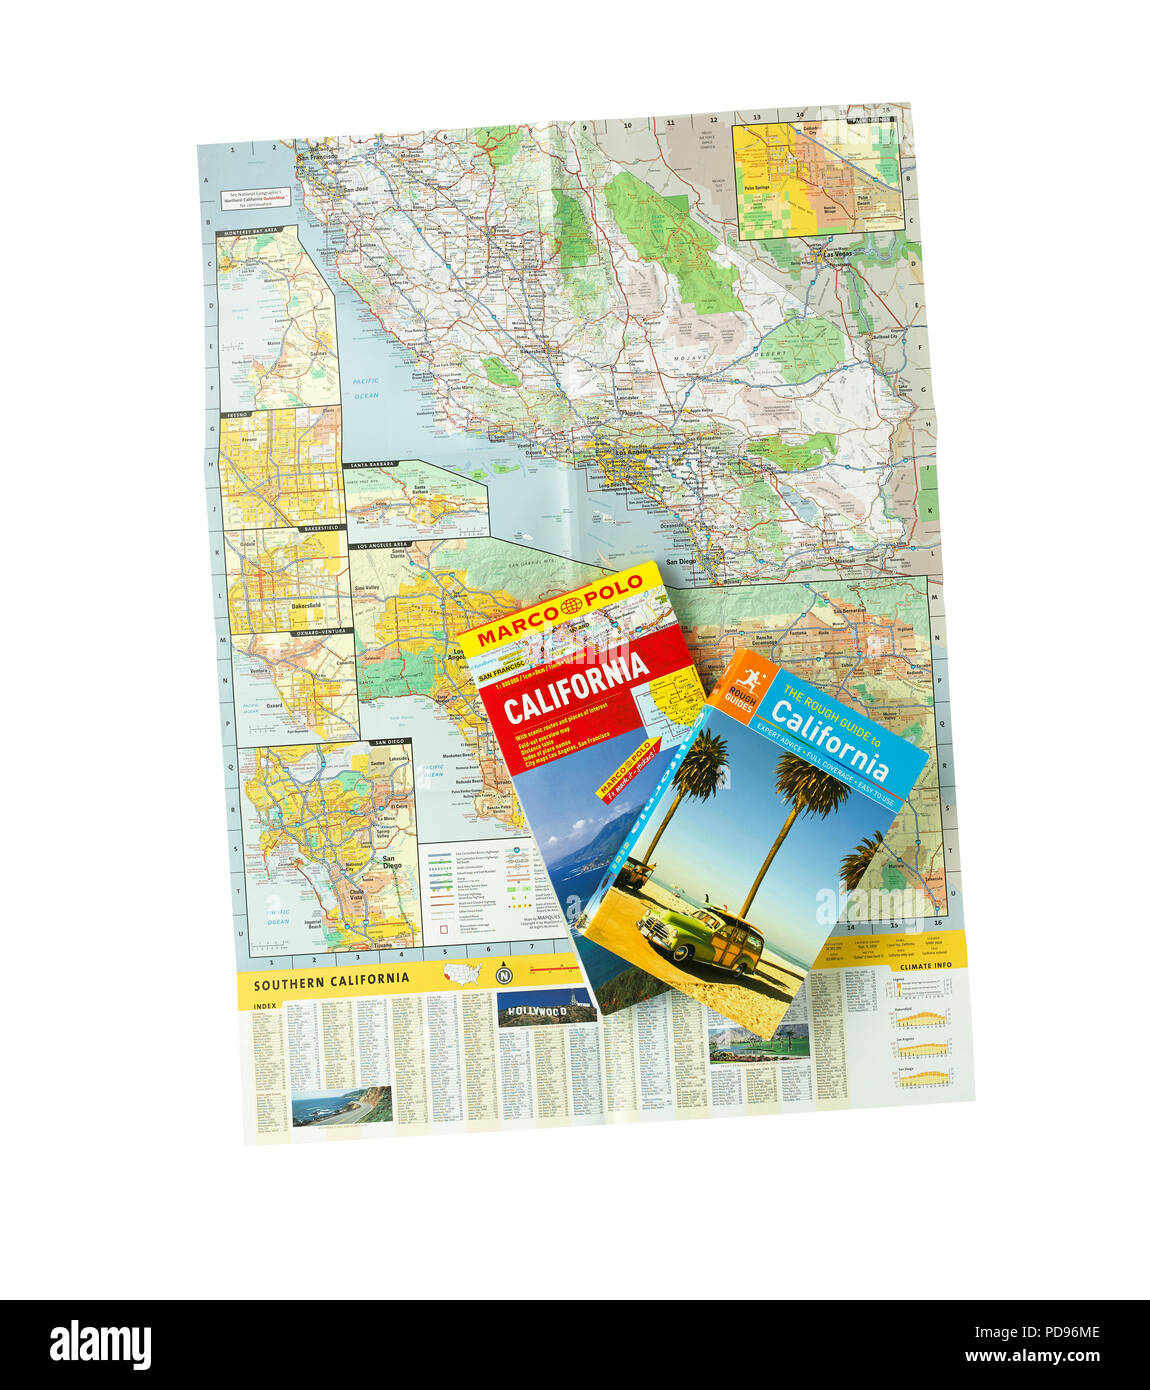 Map & guidebooks to California, USA Stock Photo